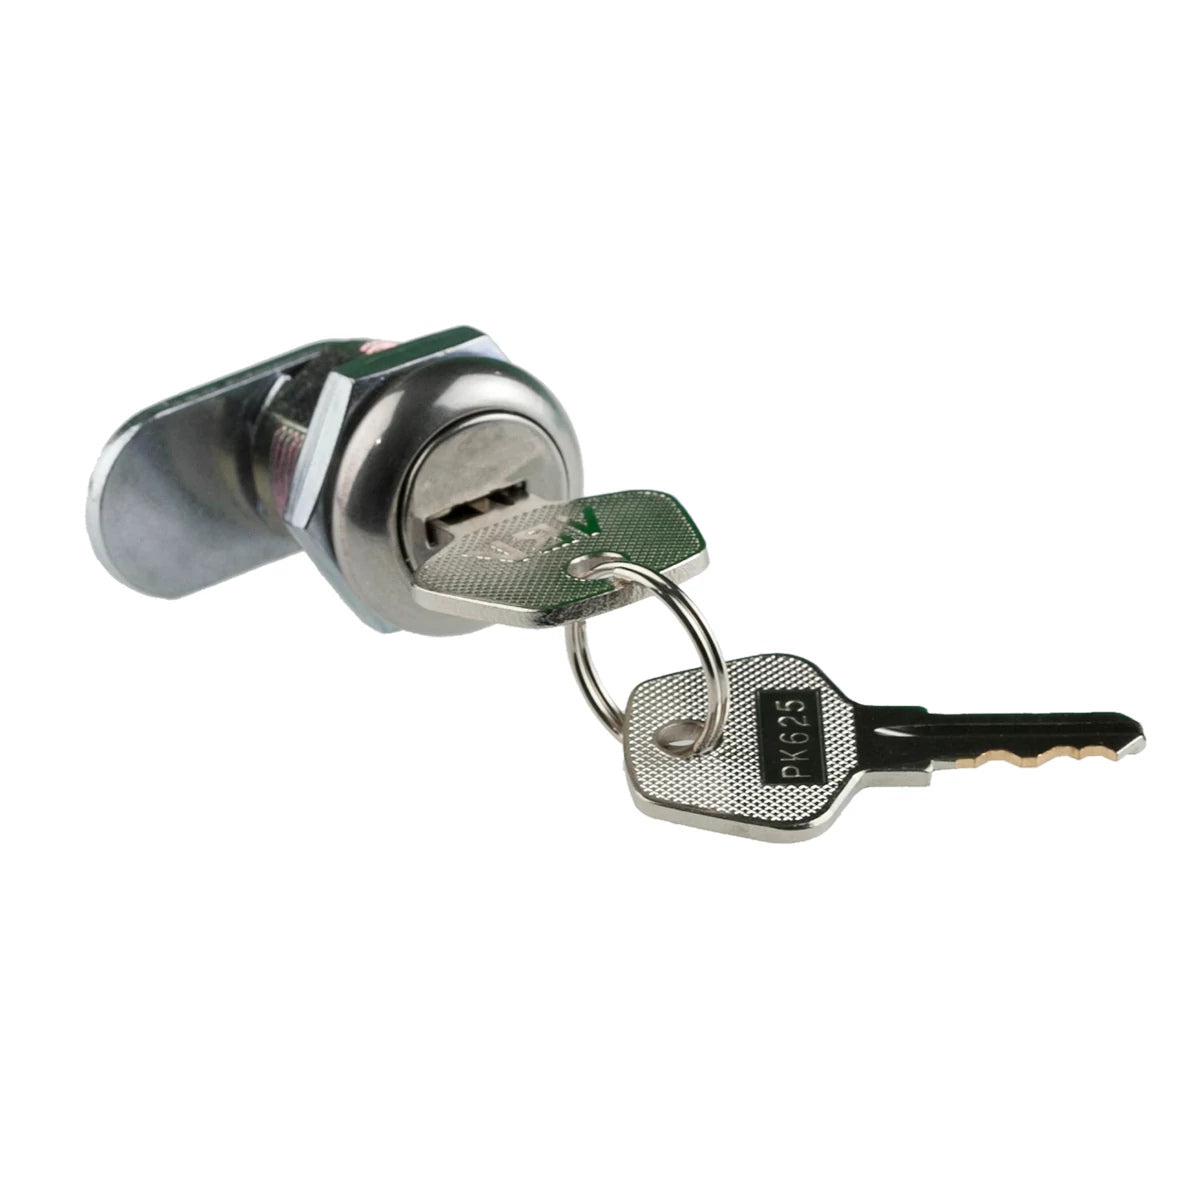 Liftmaster K002B0799-4 Lock and Key Kit, El1SS